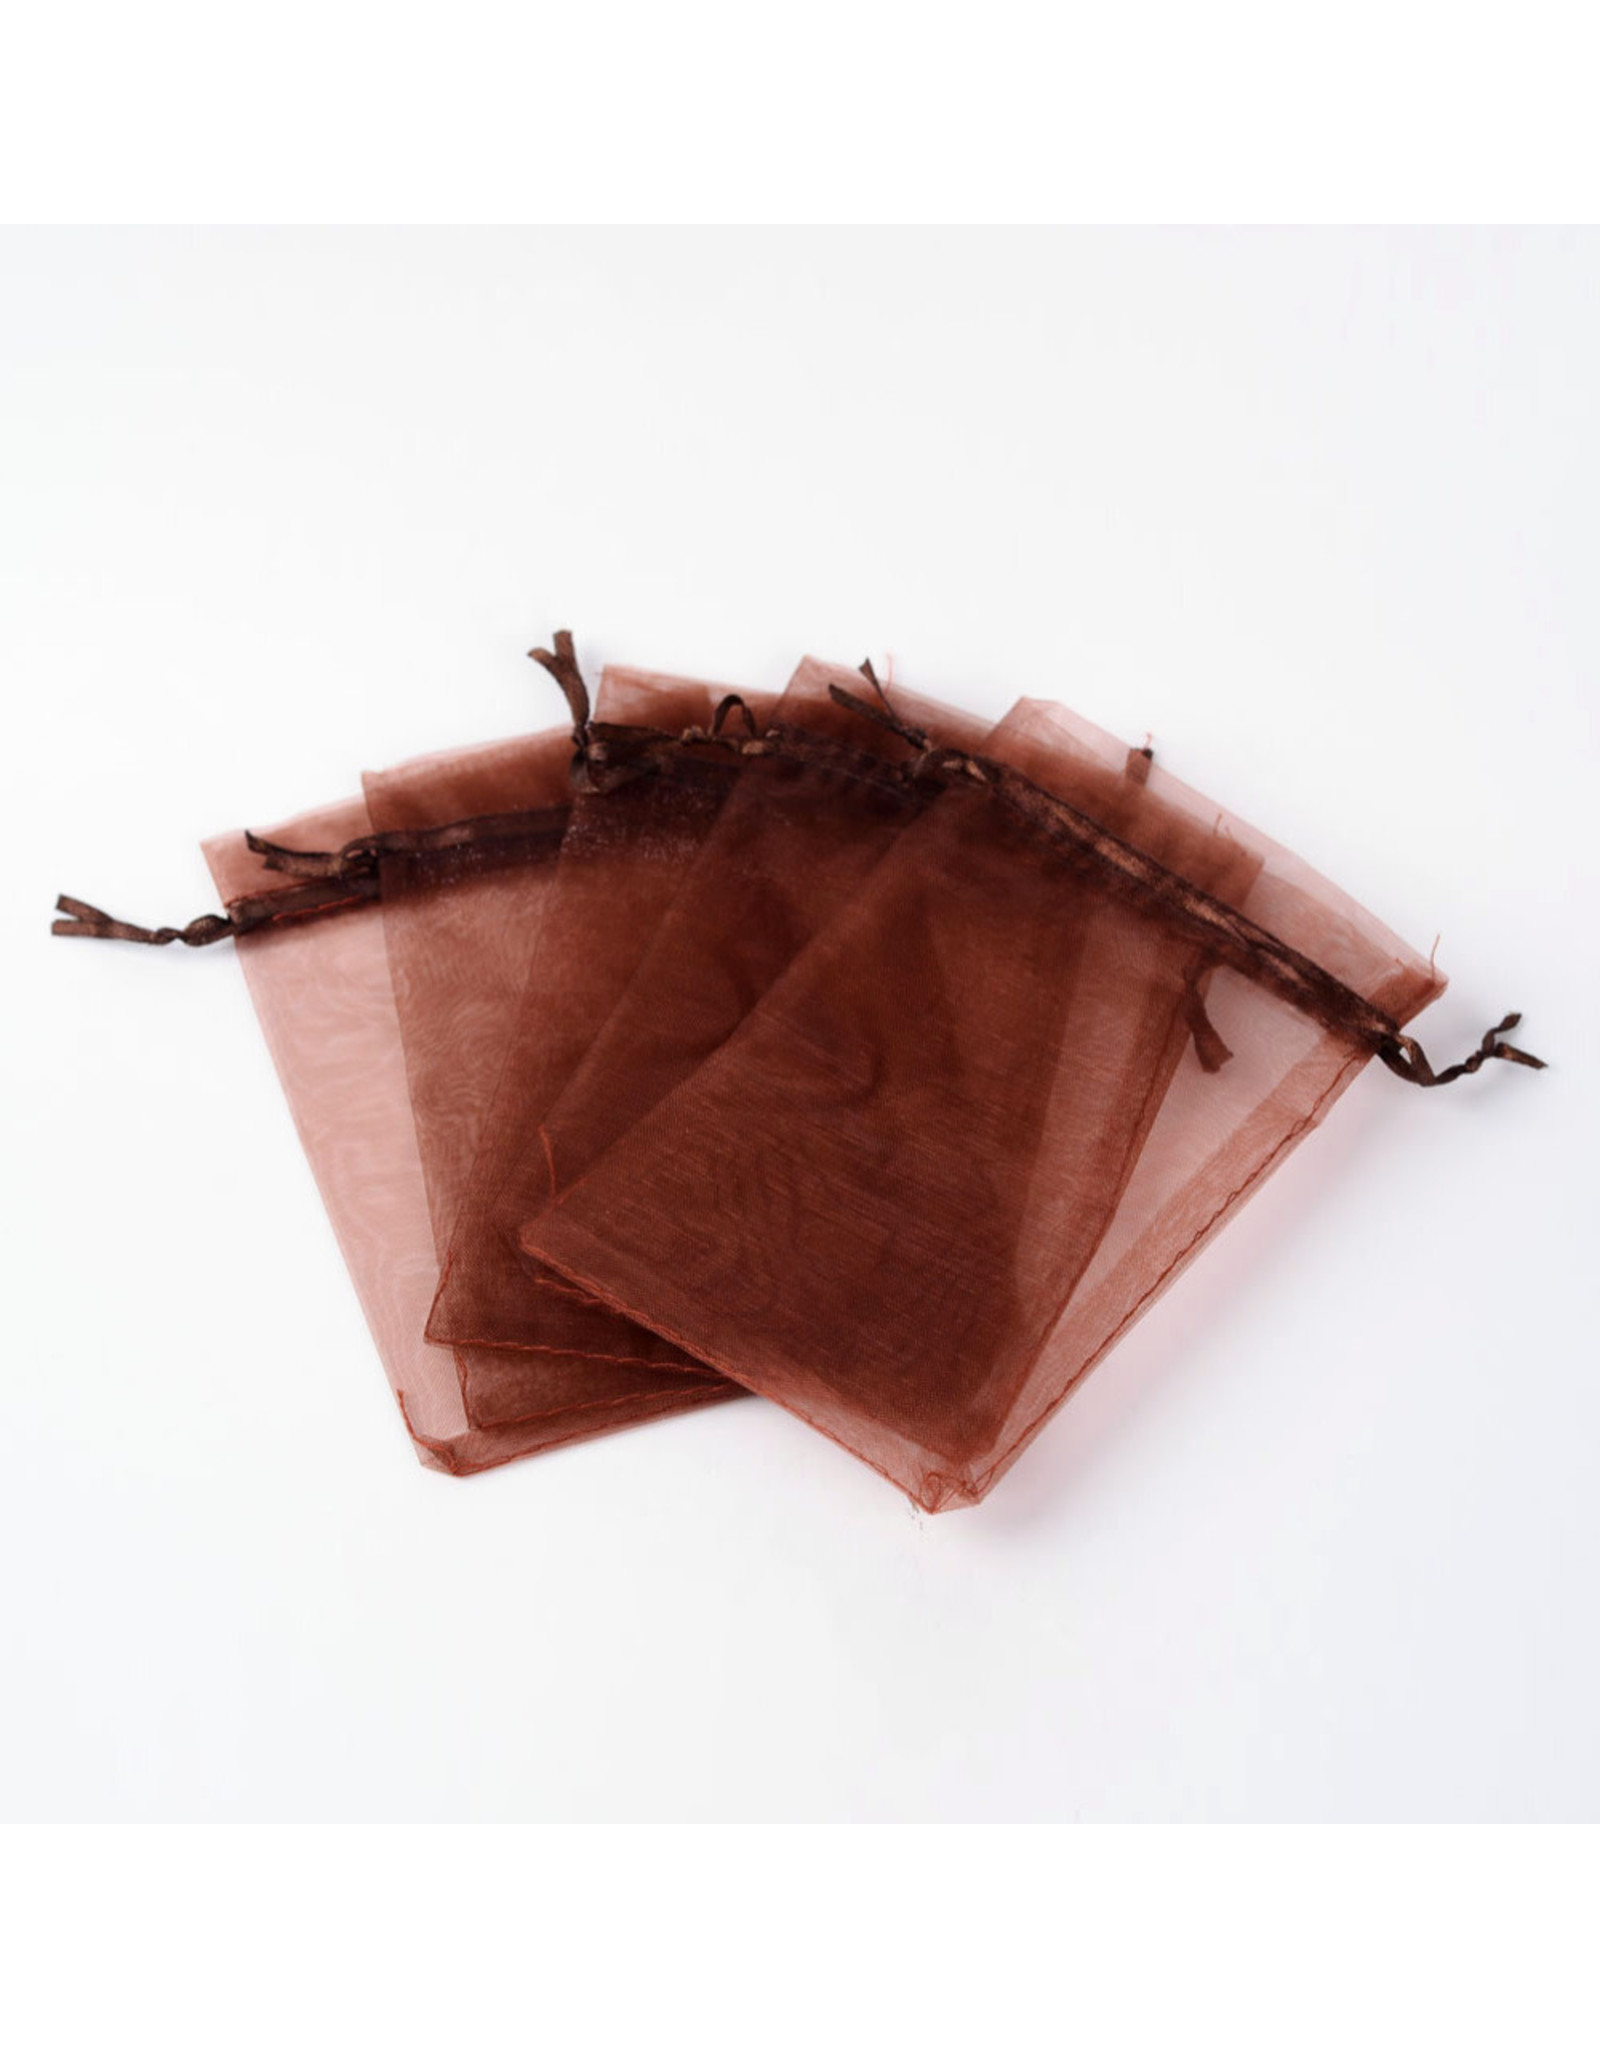 Organza Gift Bag Chocolate Brown 15x10cm  x10